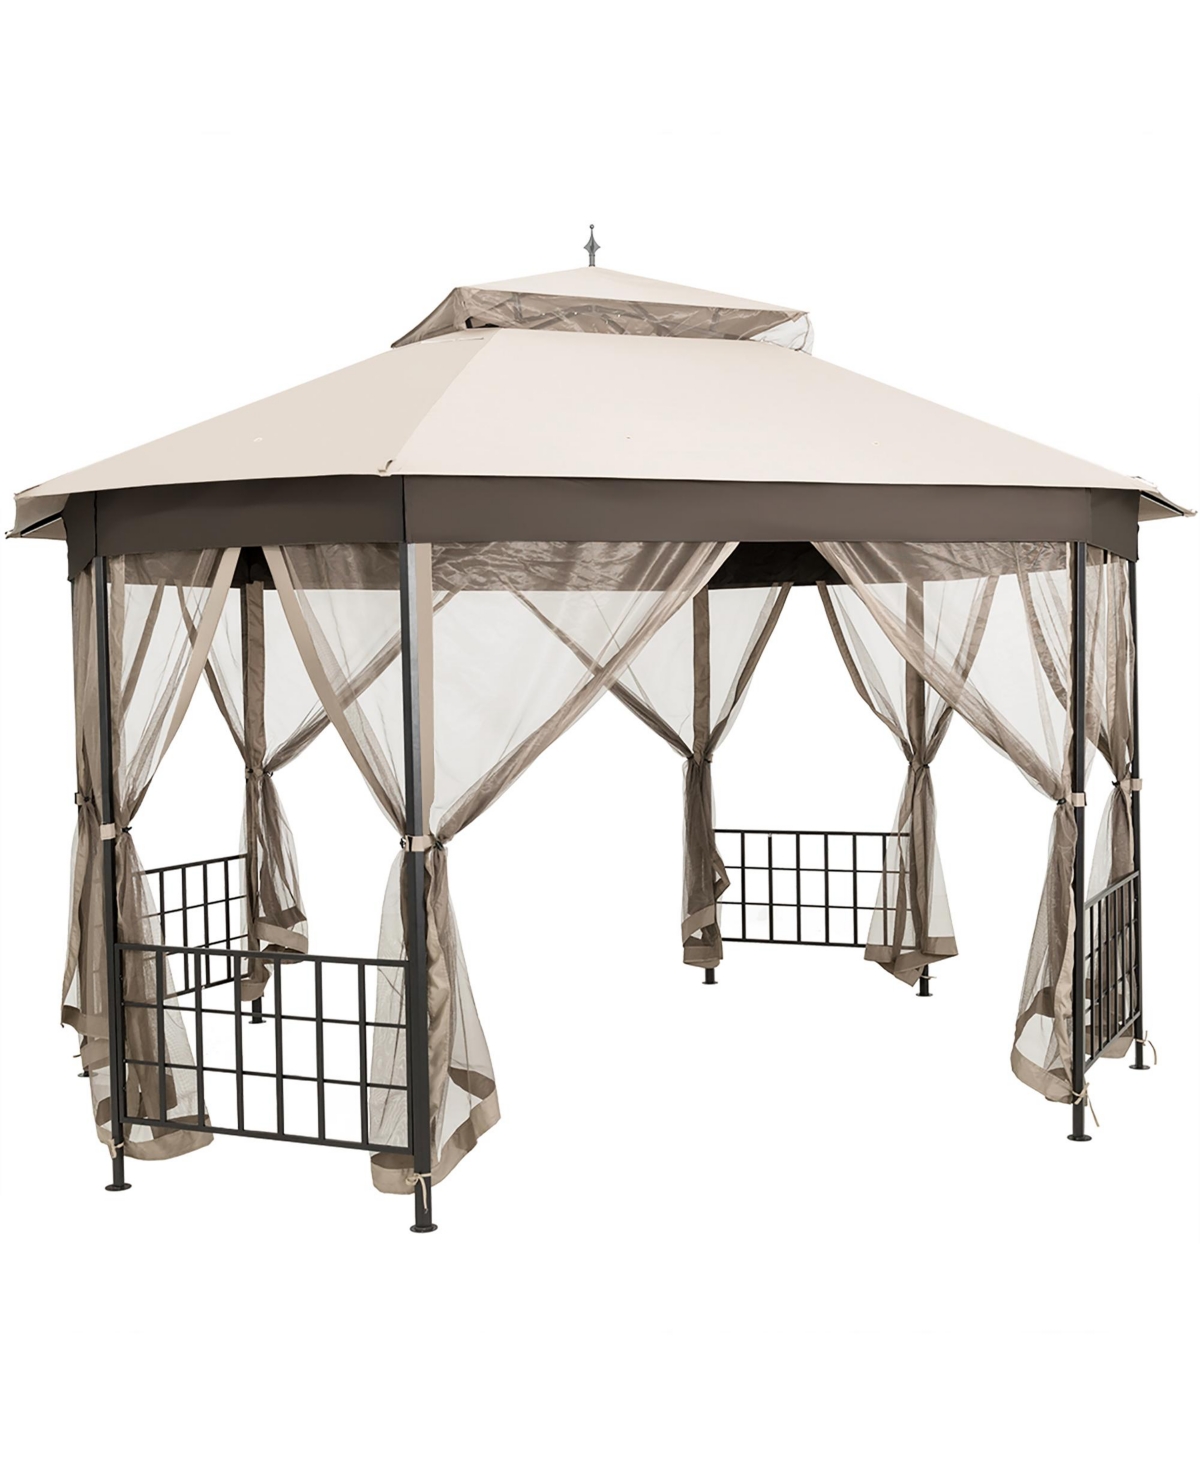 10'x12' Patio Gazebo Canopy Shelter Double Top Netting Sidewalls - Beige/khaki